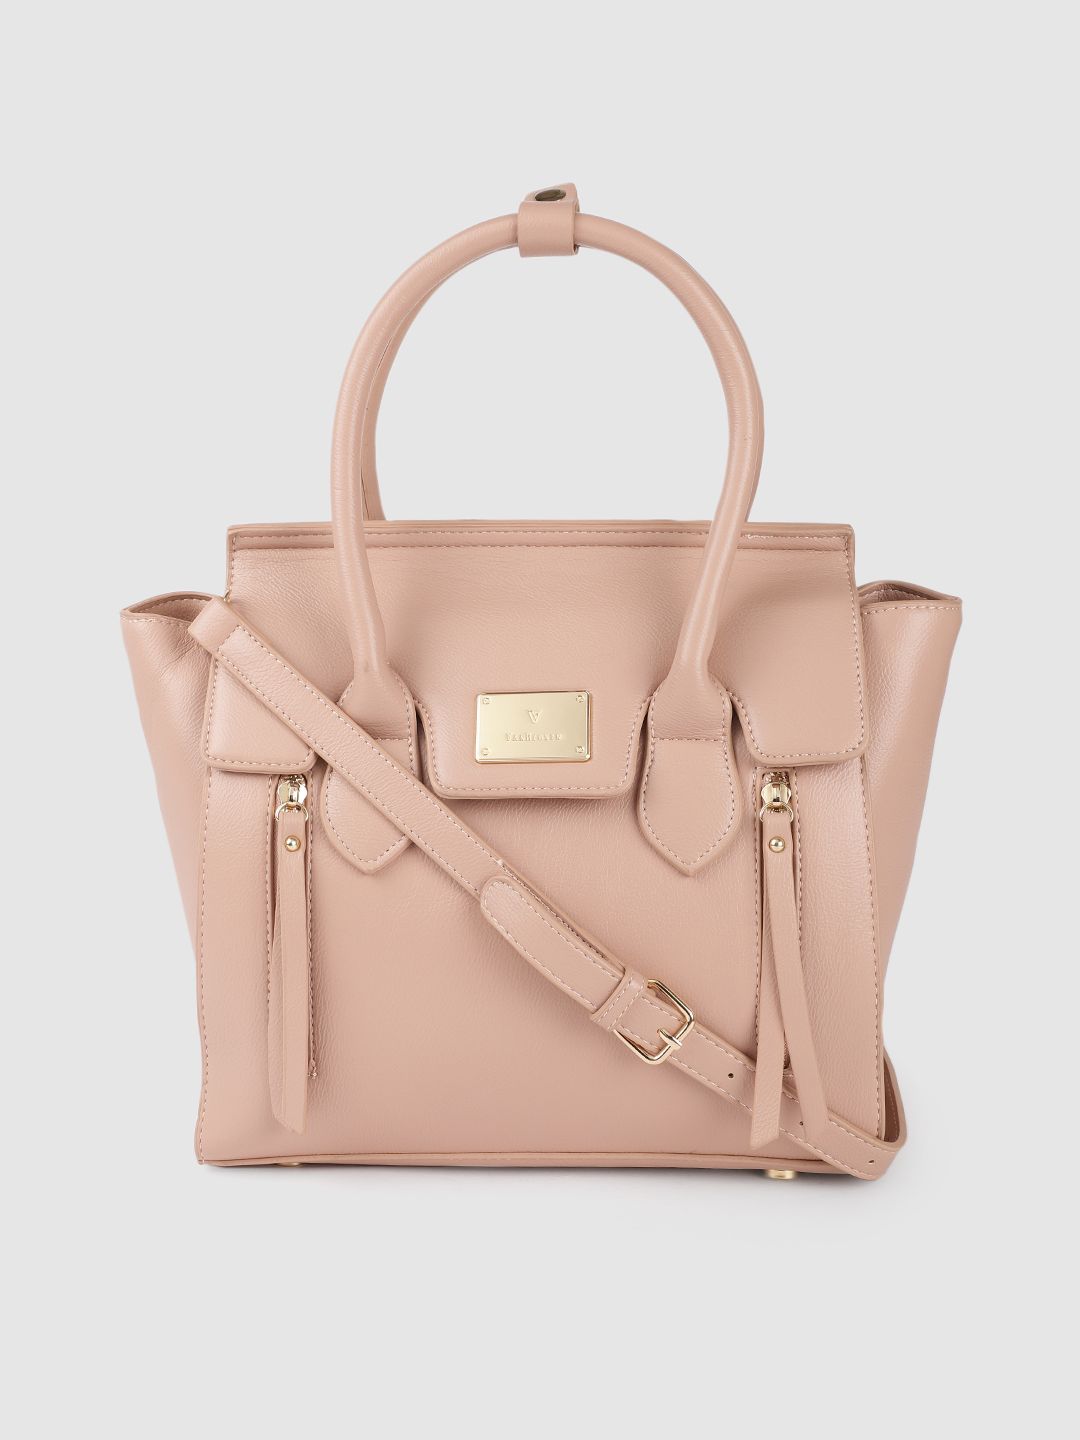 Van Heusen Pink Structured Handheld Bag with Tasselled Detail Price in India